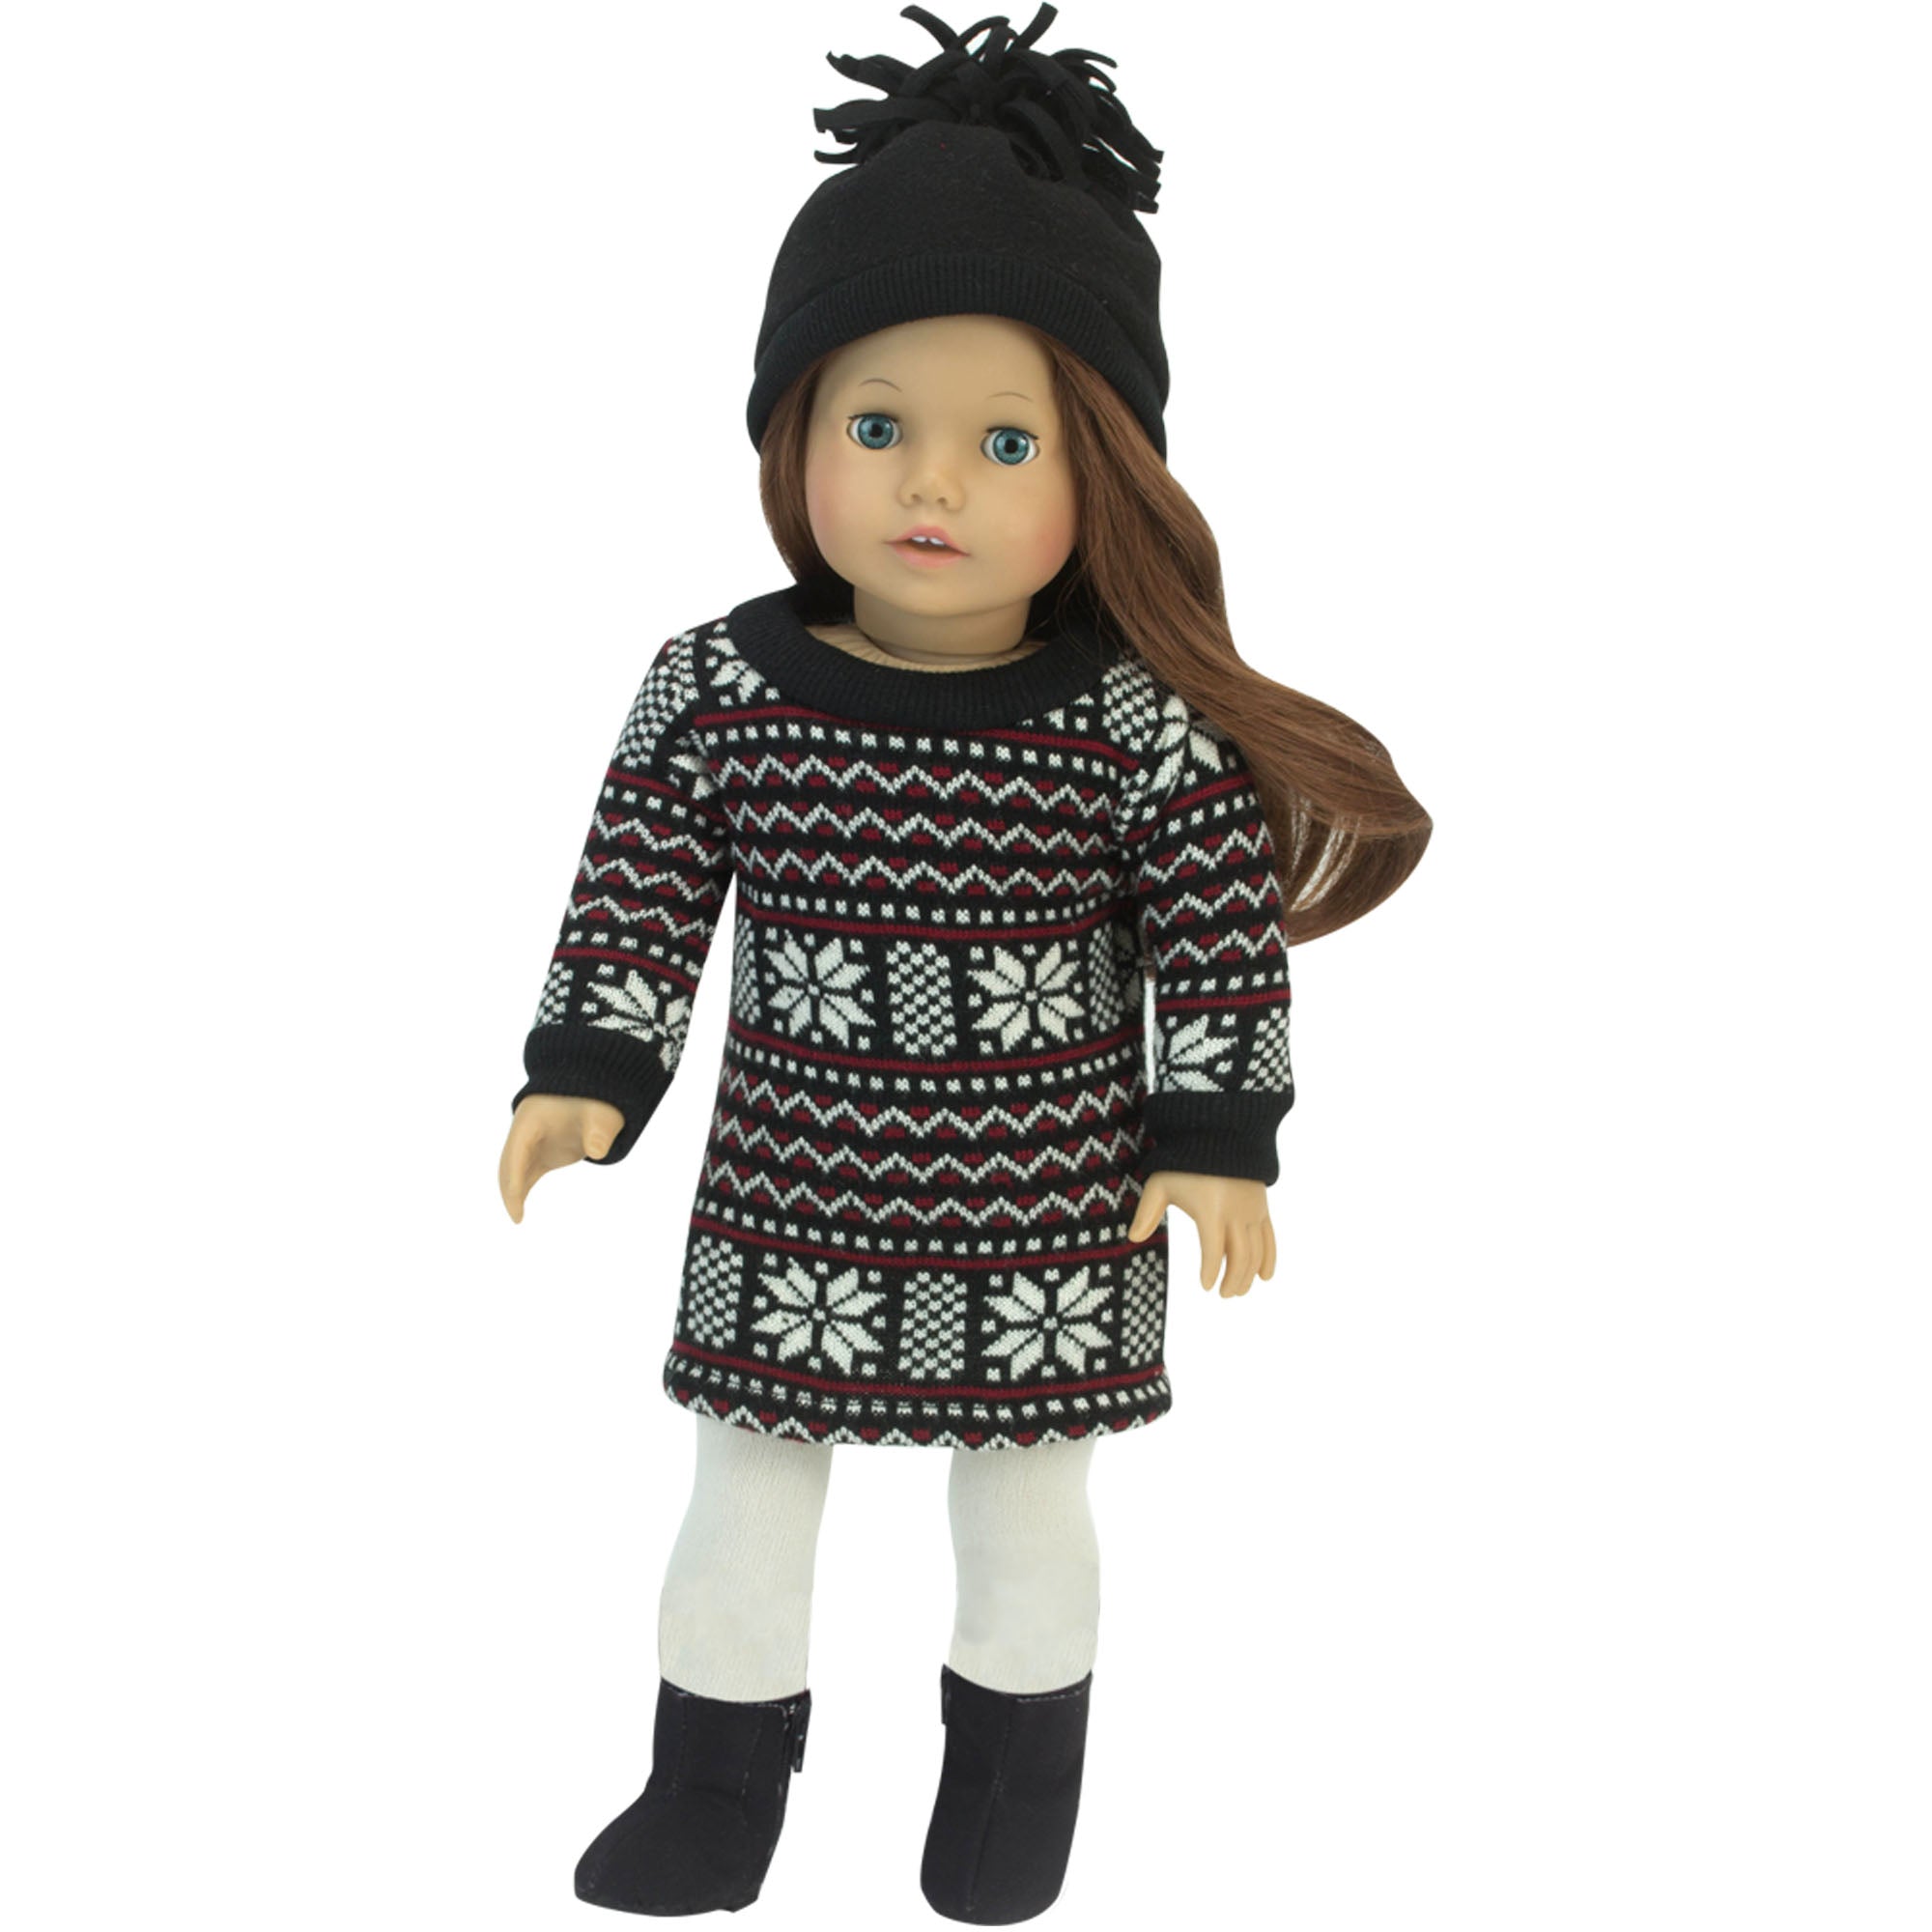 Sophia's Fair Isle Sweater Dress and Hat for 18" Dolls, Black